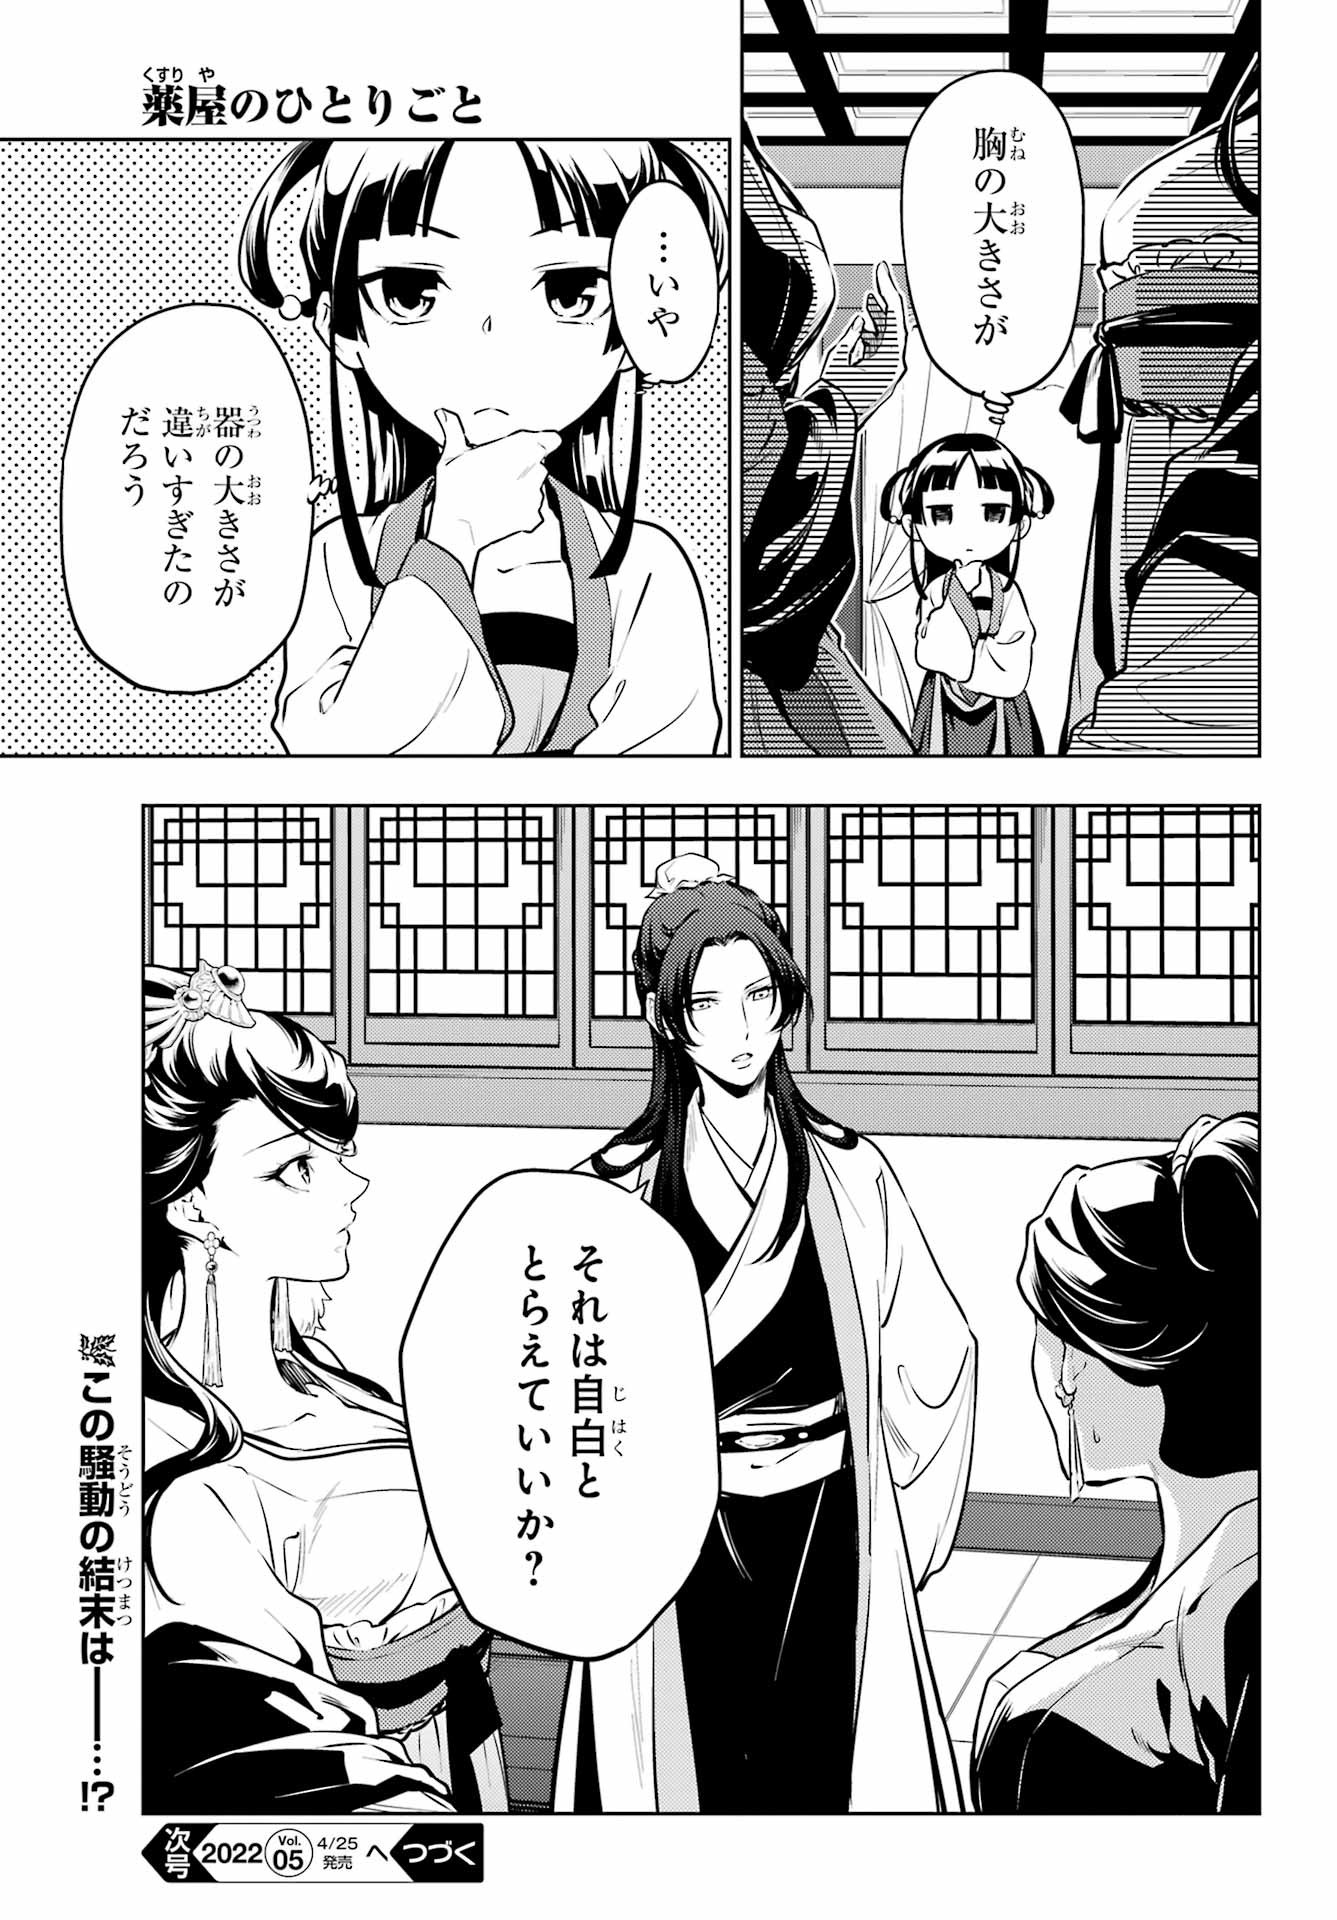 Kusuriya no Hitorigoto - Chapter 52 - Page 20